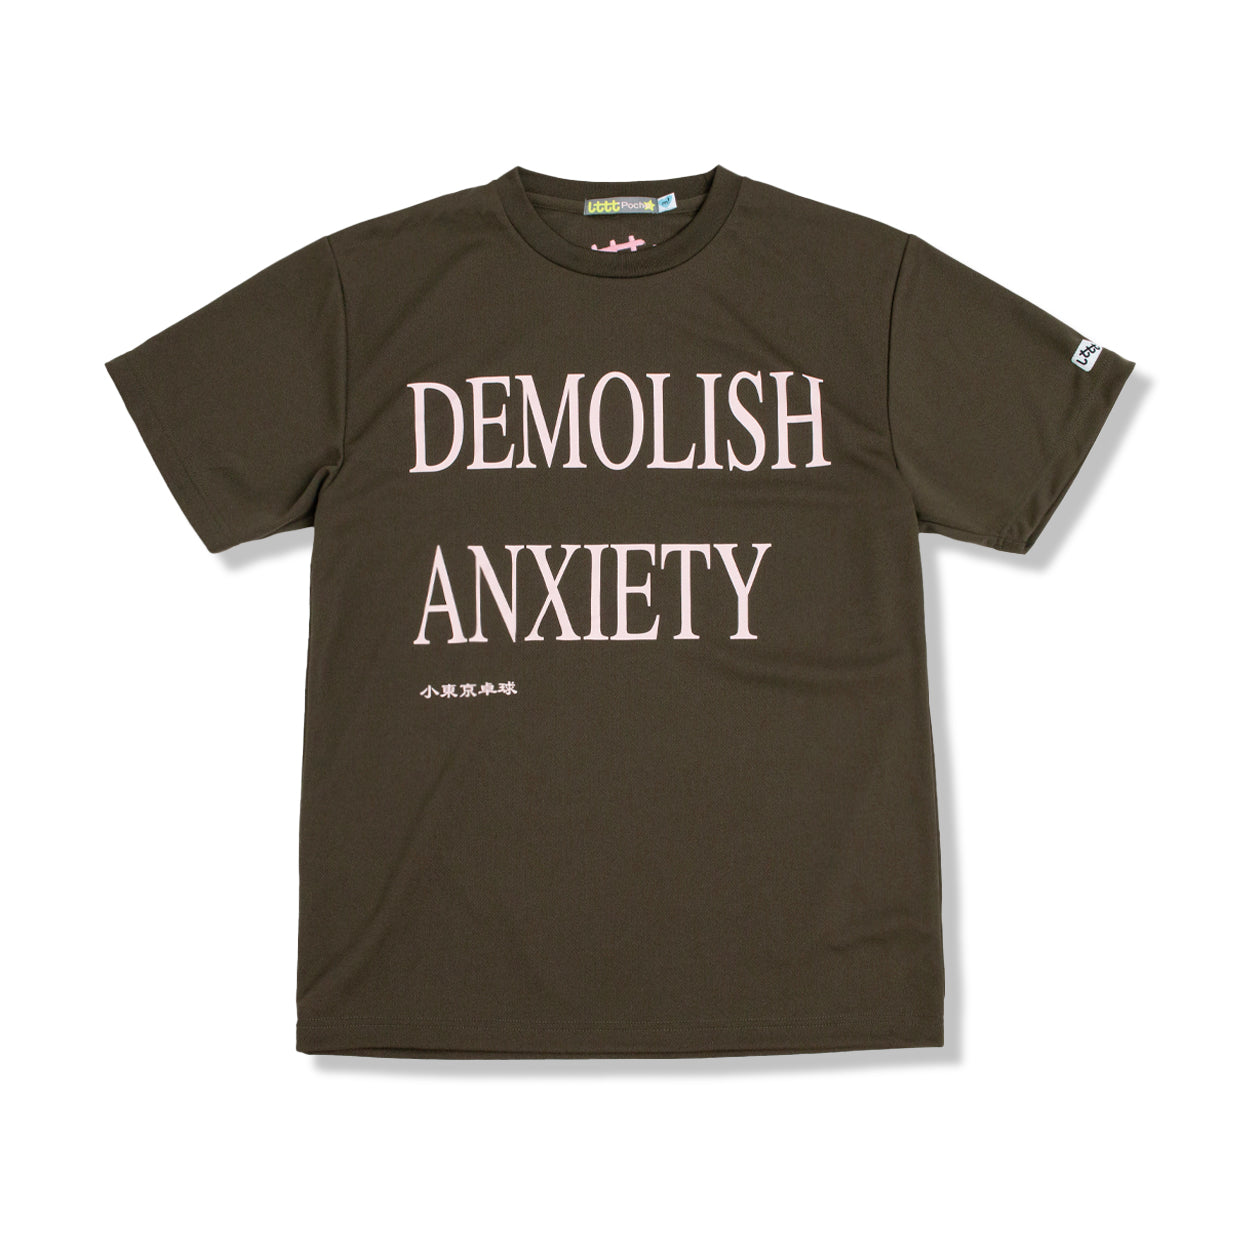 Demolish Anxiety V.2 Tee, Dark Green